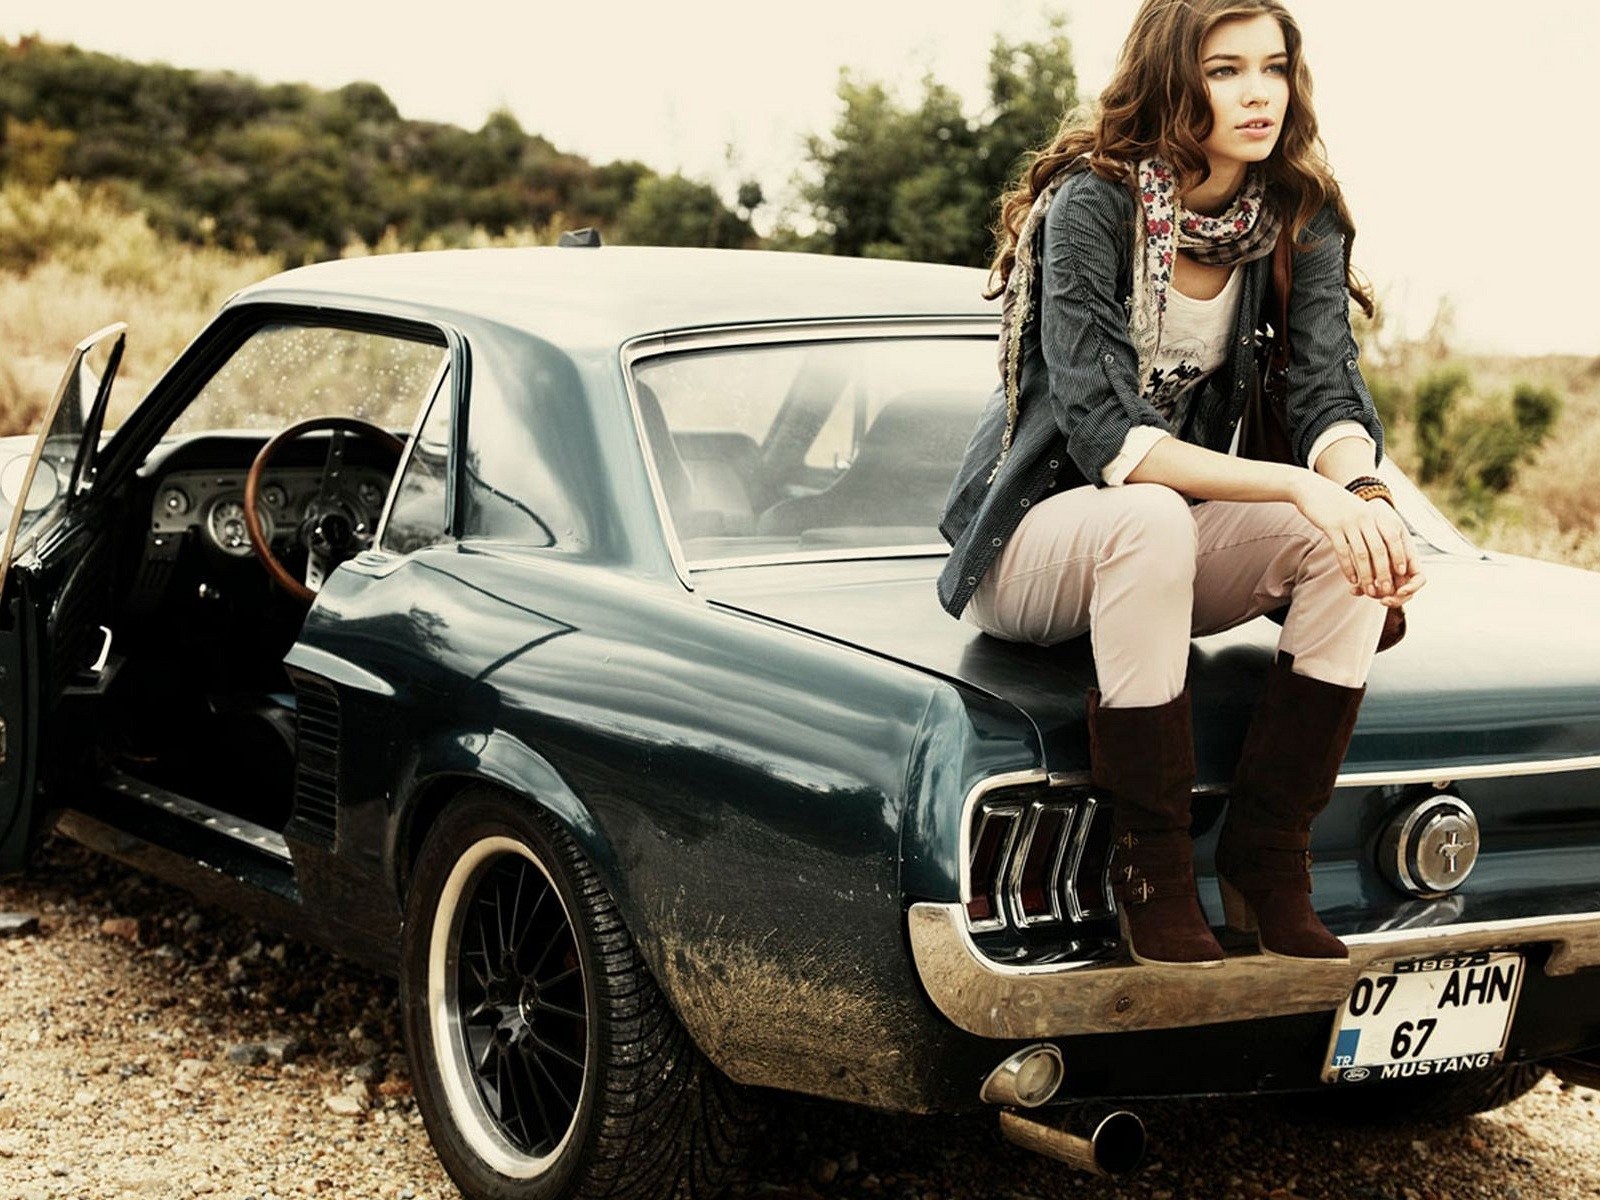 Ford-Mustang-Girl-1600x1200.jpg